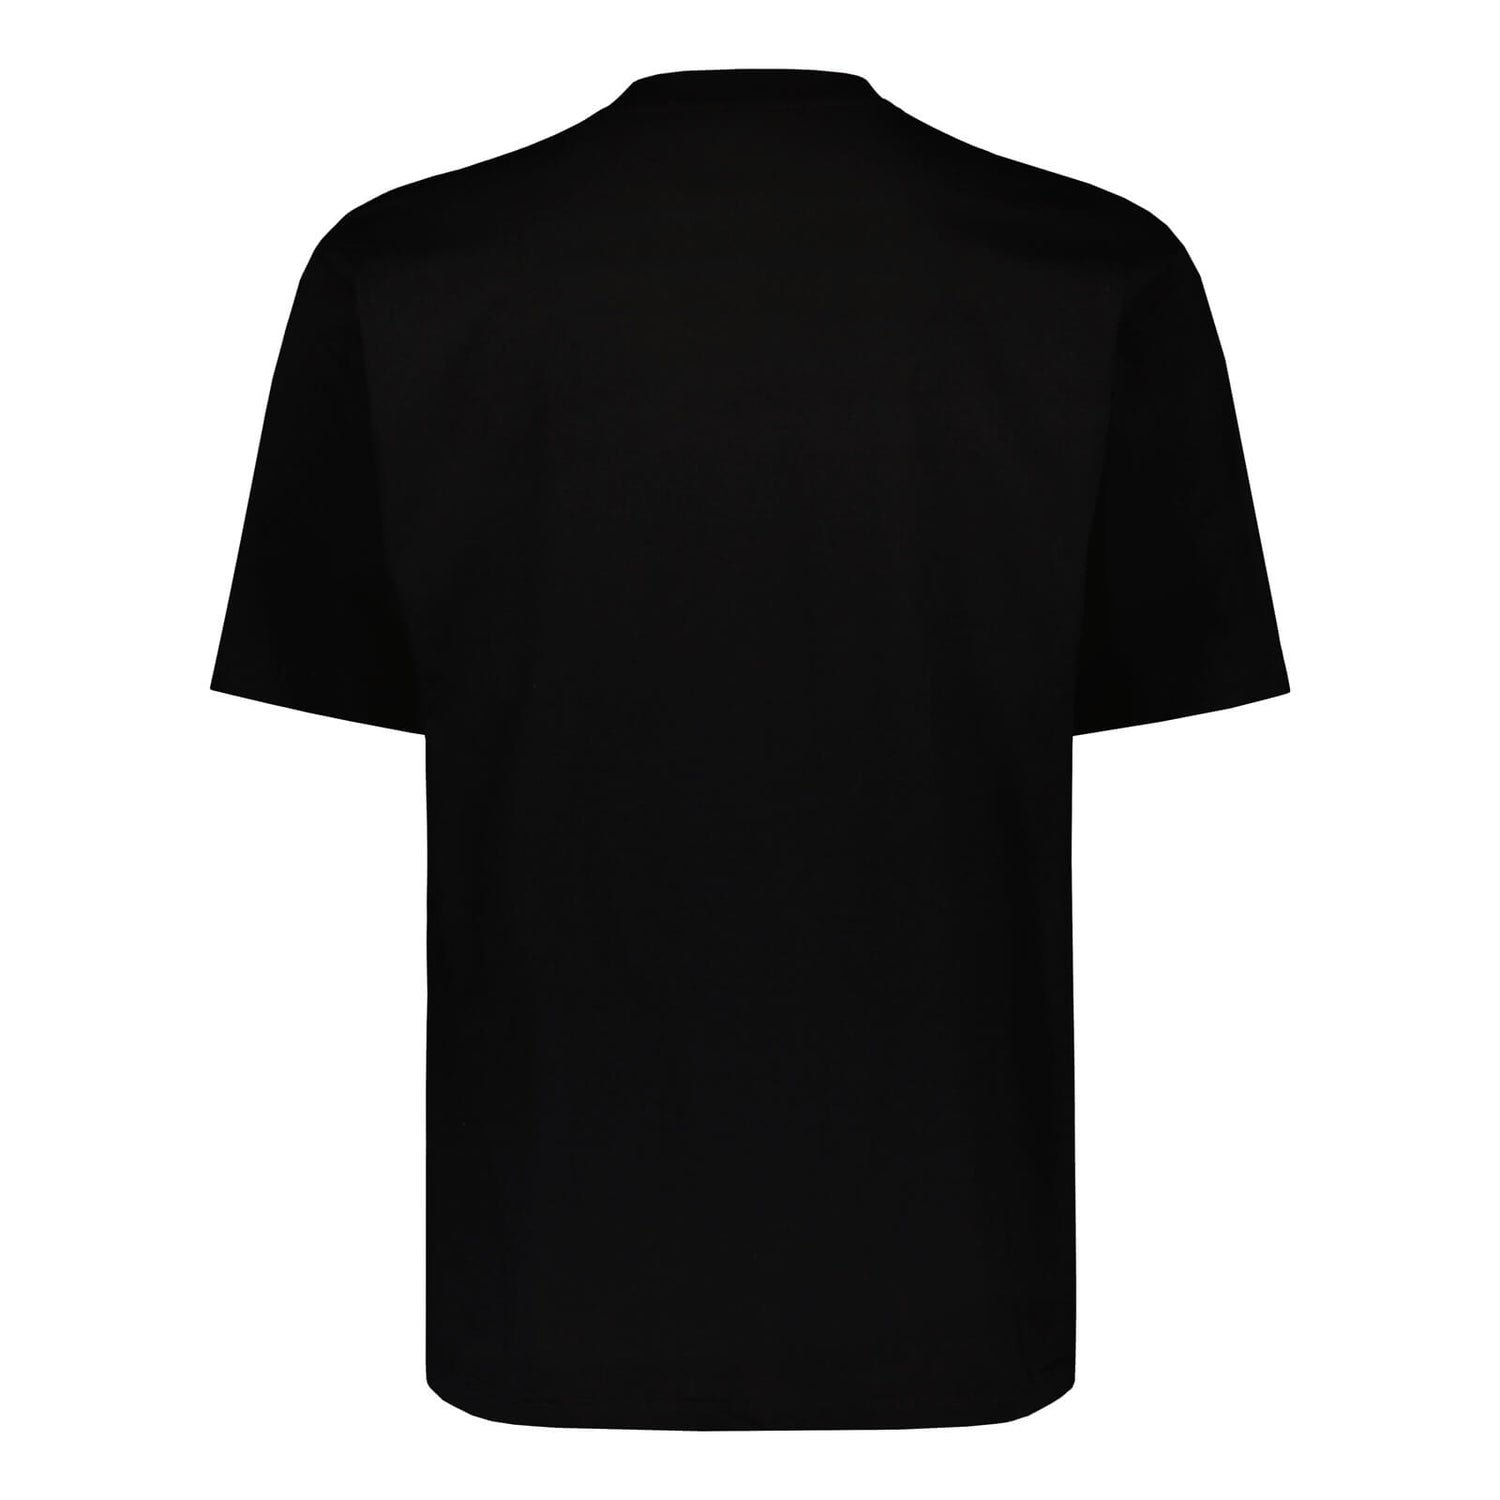 Teemu Pukki Fan T-shirt, Black